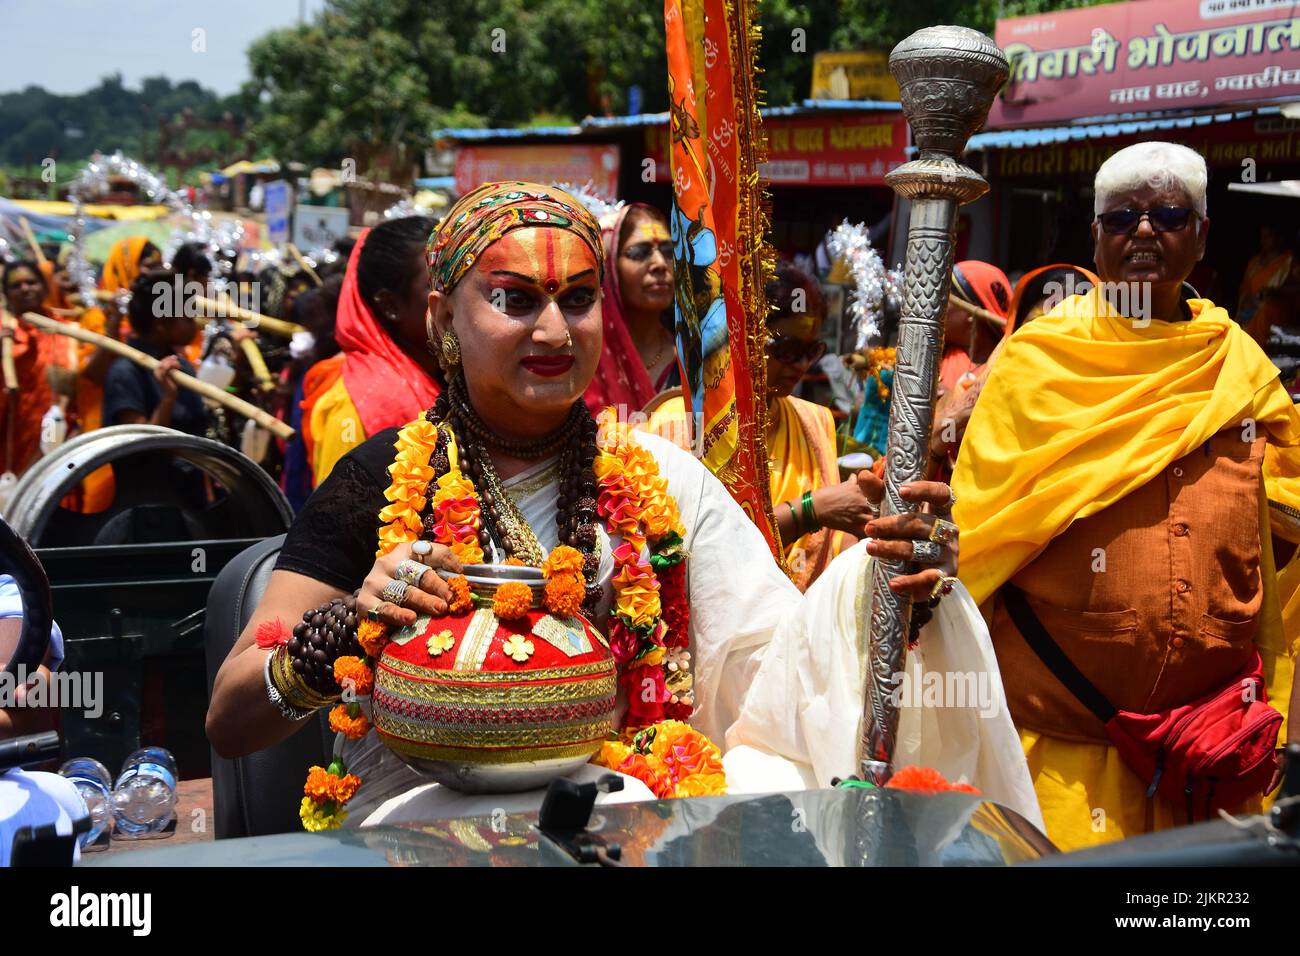 India : Maha mandleshwar Himangi sakhi (Holy Transgender) carries the water collected from the Narmada river during the month of shravan festival in Jabalpur Madhya Pradesh. Photo by - Uma Shankar Mishra Stock Photo